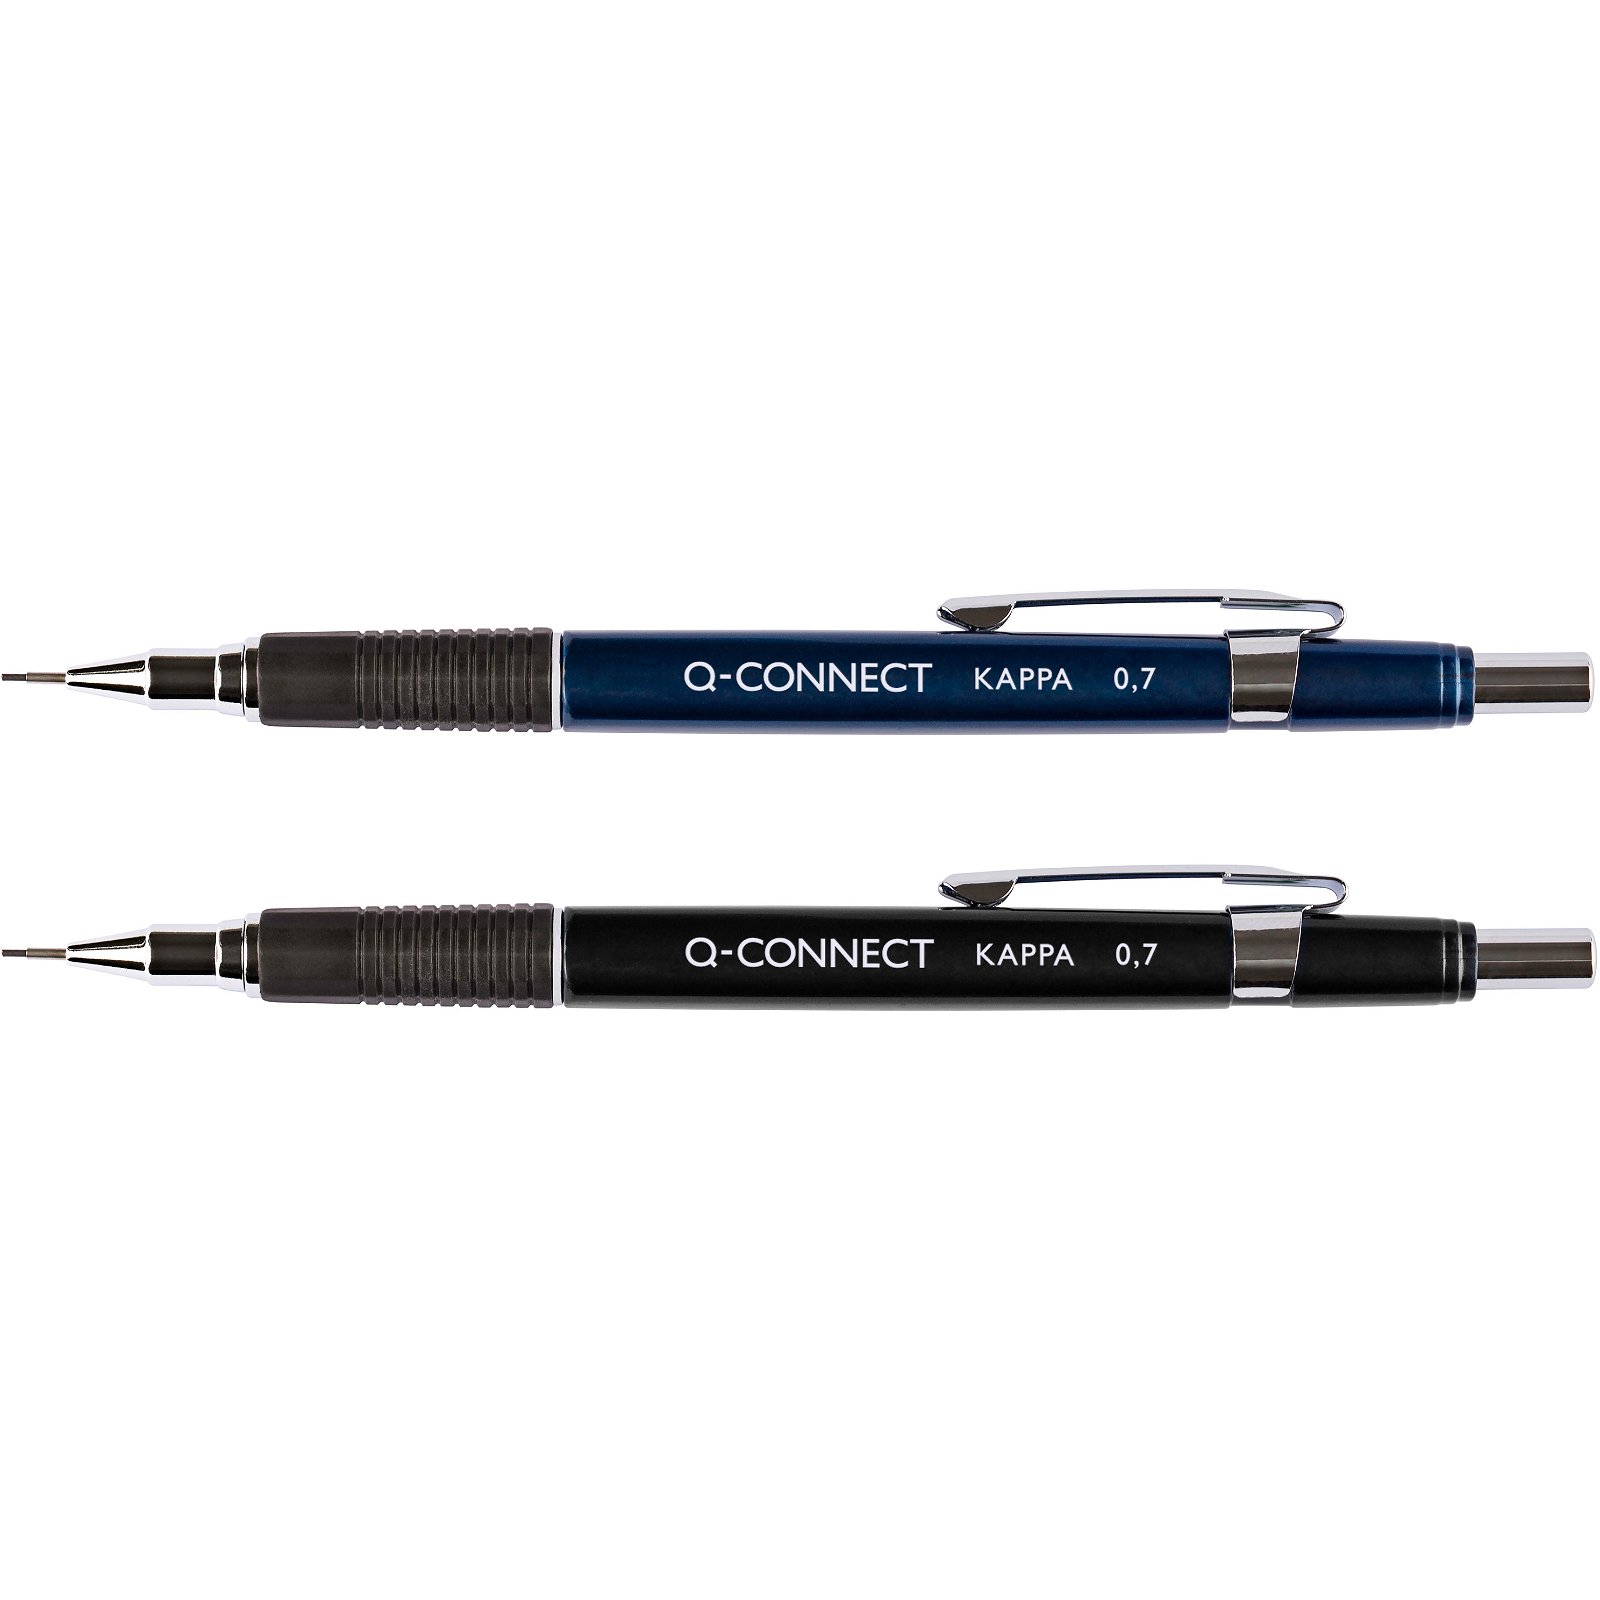 Q-connect Kappa pencil 0,7mm